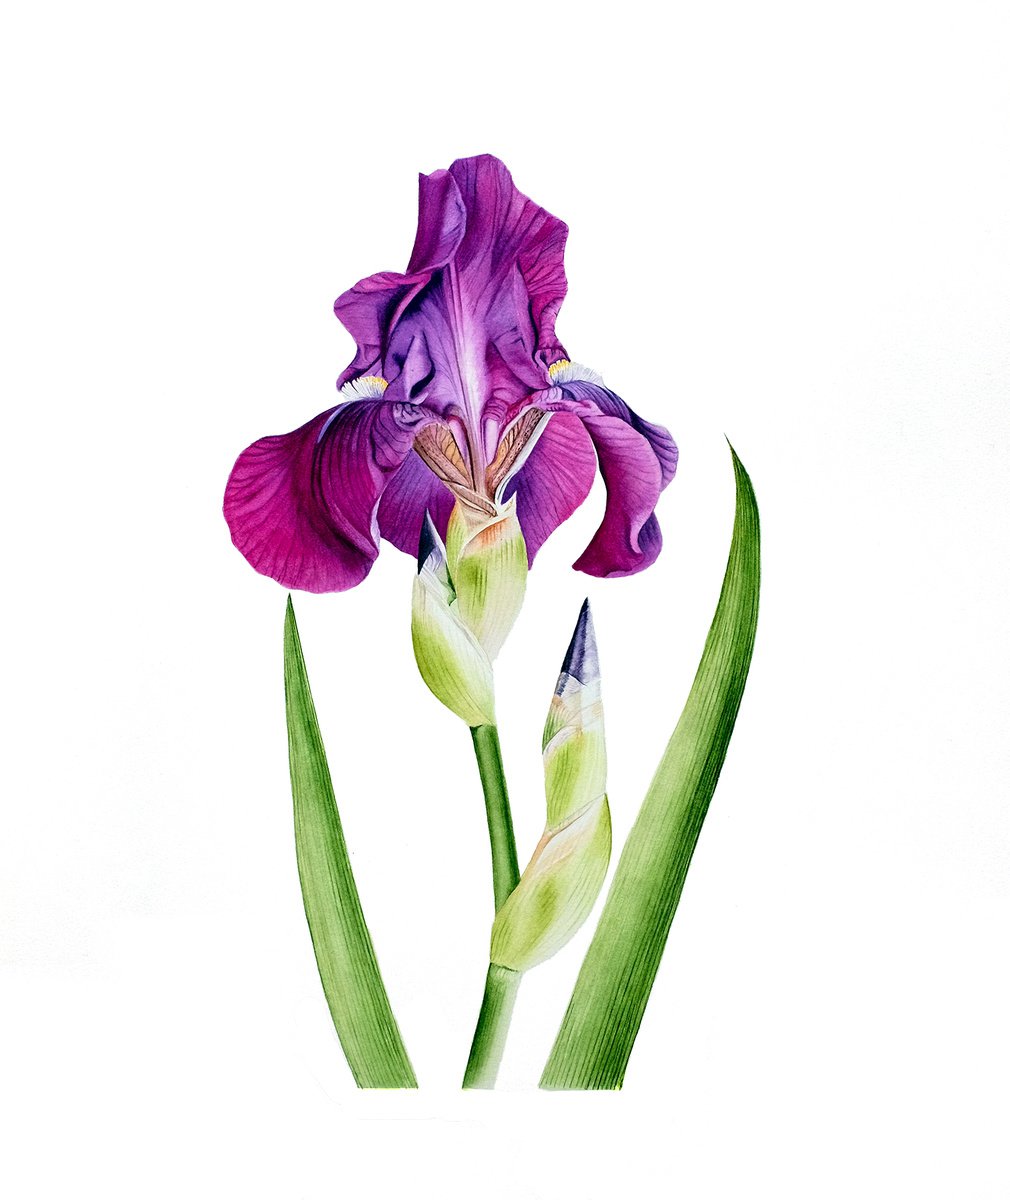 Purple iris by Maiia Axton